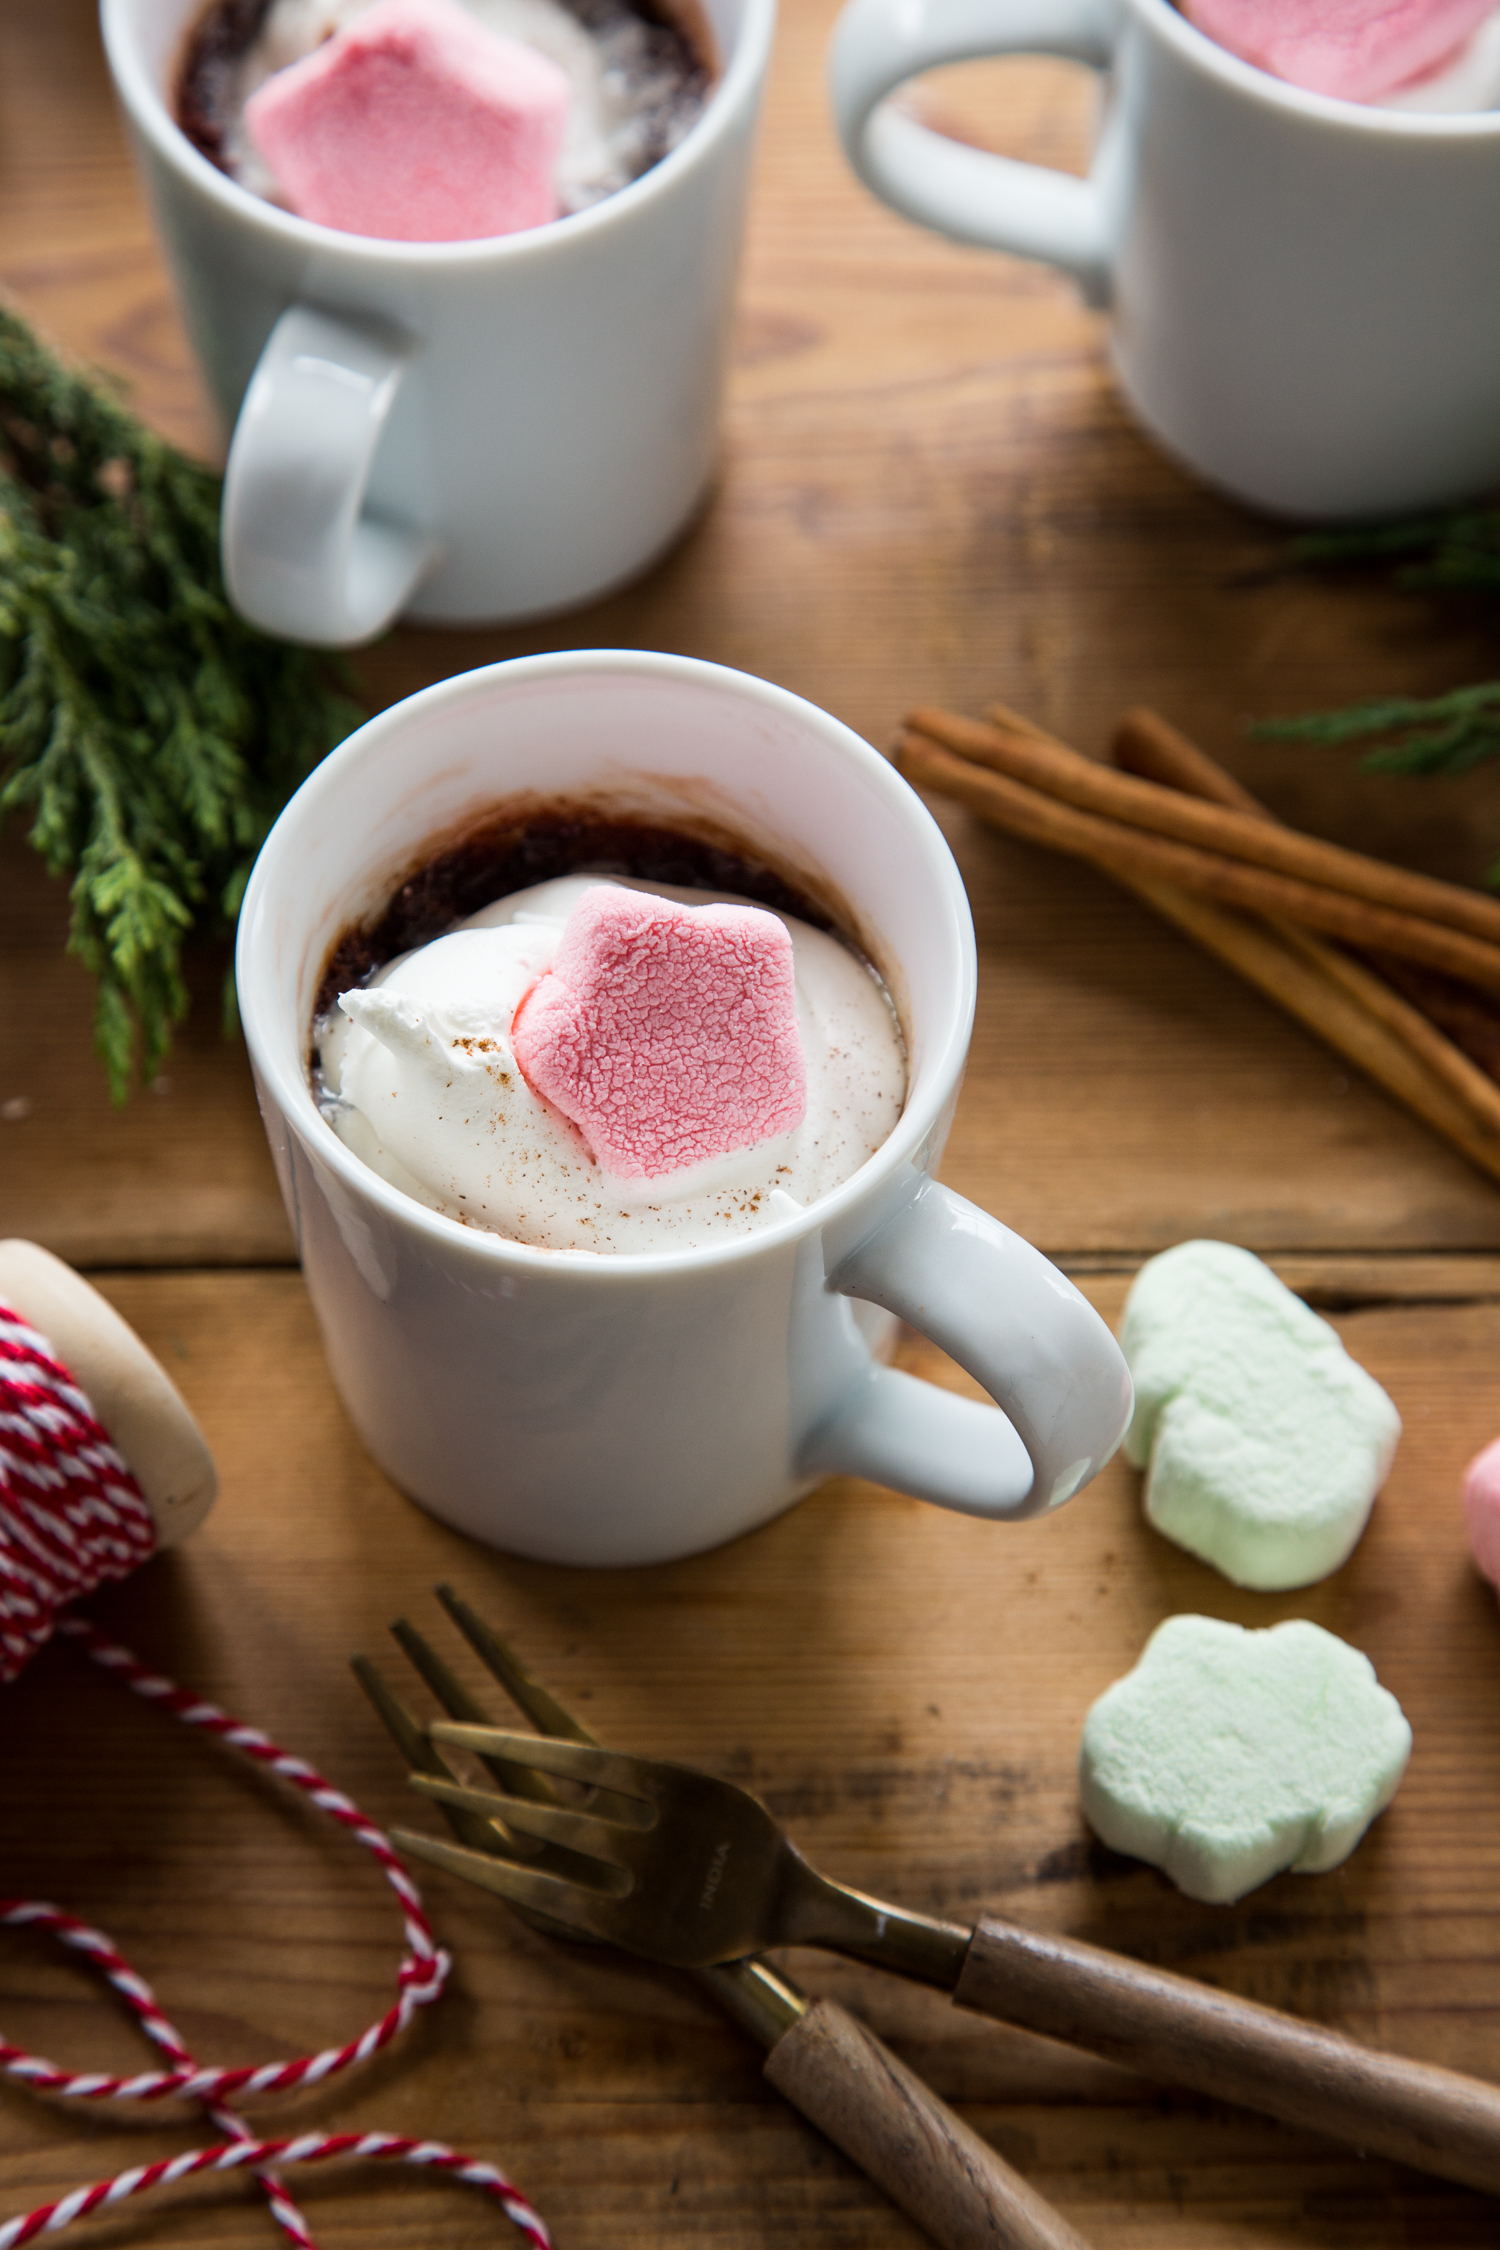 Make a sweet Cinnamon Marshmallow Mug Brownie topped with an adorable Cinnamon Marshmallow!